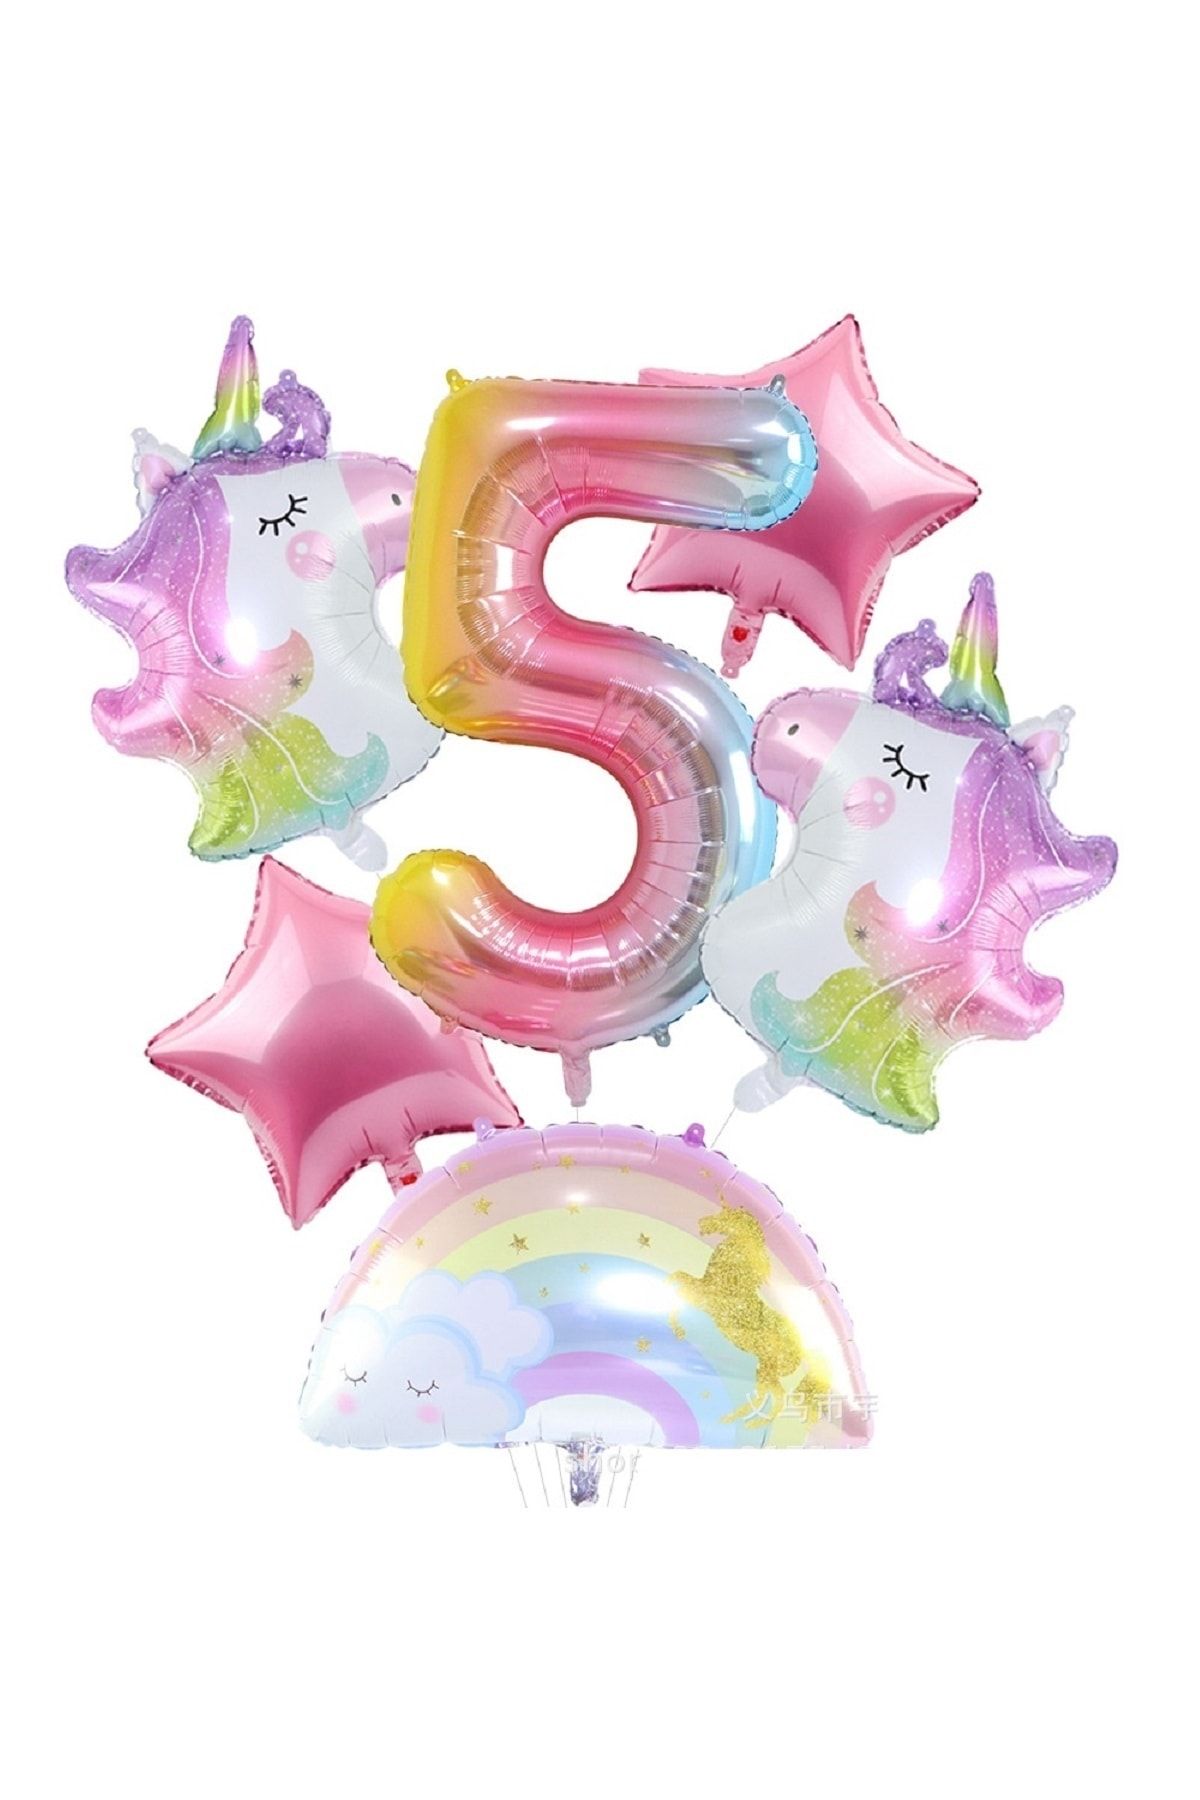 PartiMix Sevimli Unicorn Konsepti 5 Yaş Kız Çocuk Doğum Günü Parti Süsü Balon Seti Folyo Balonları